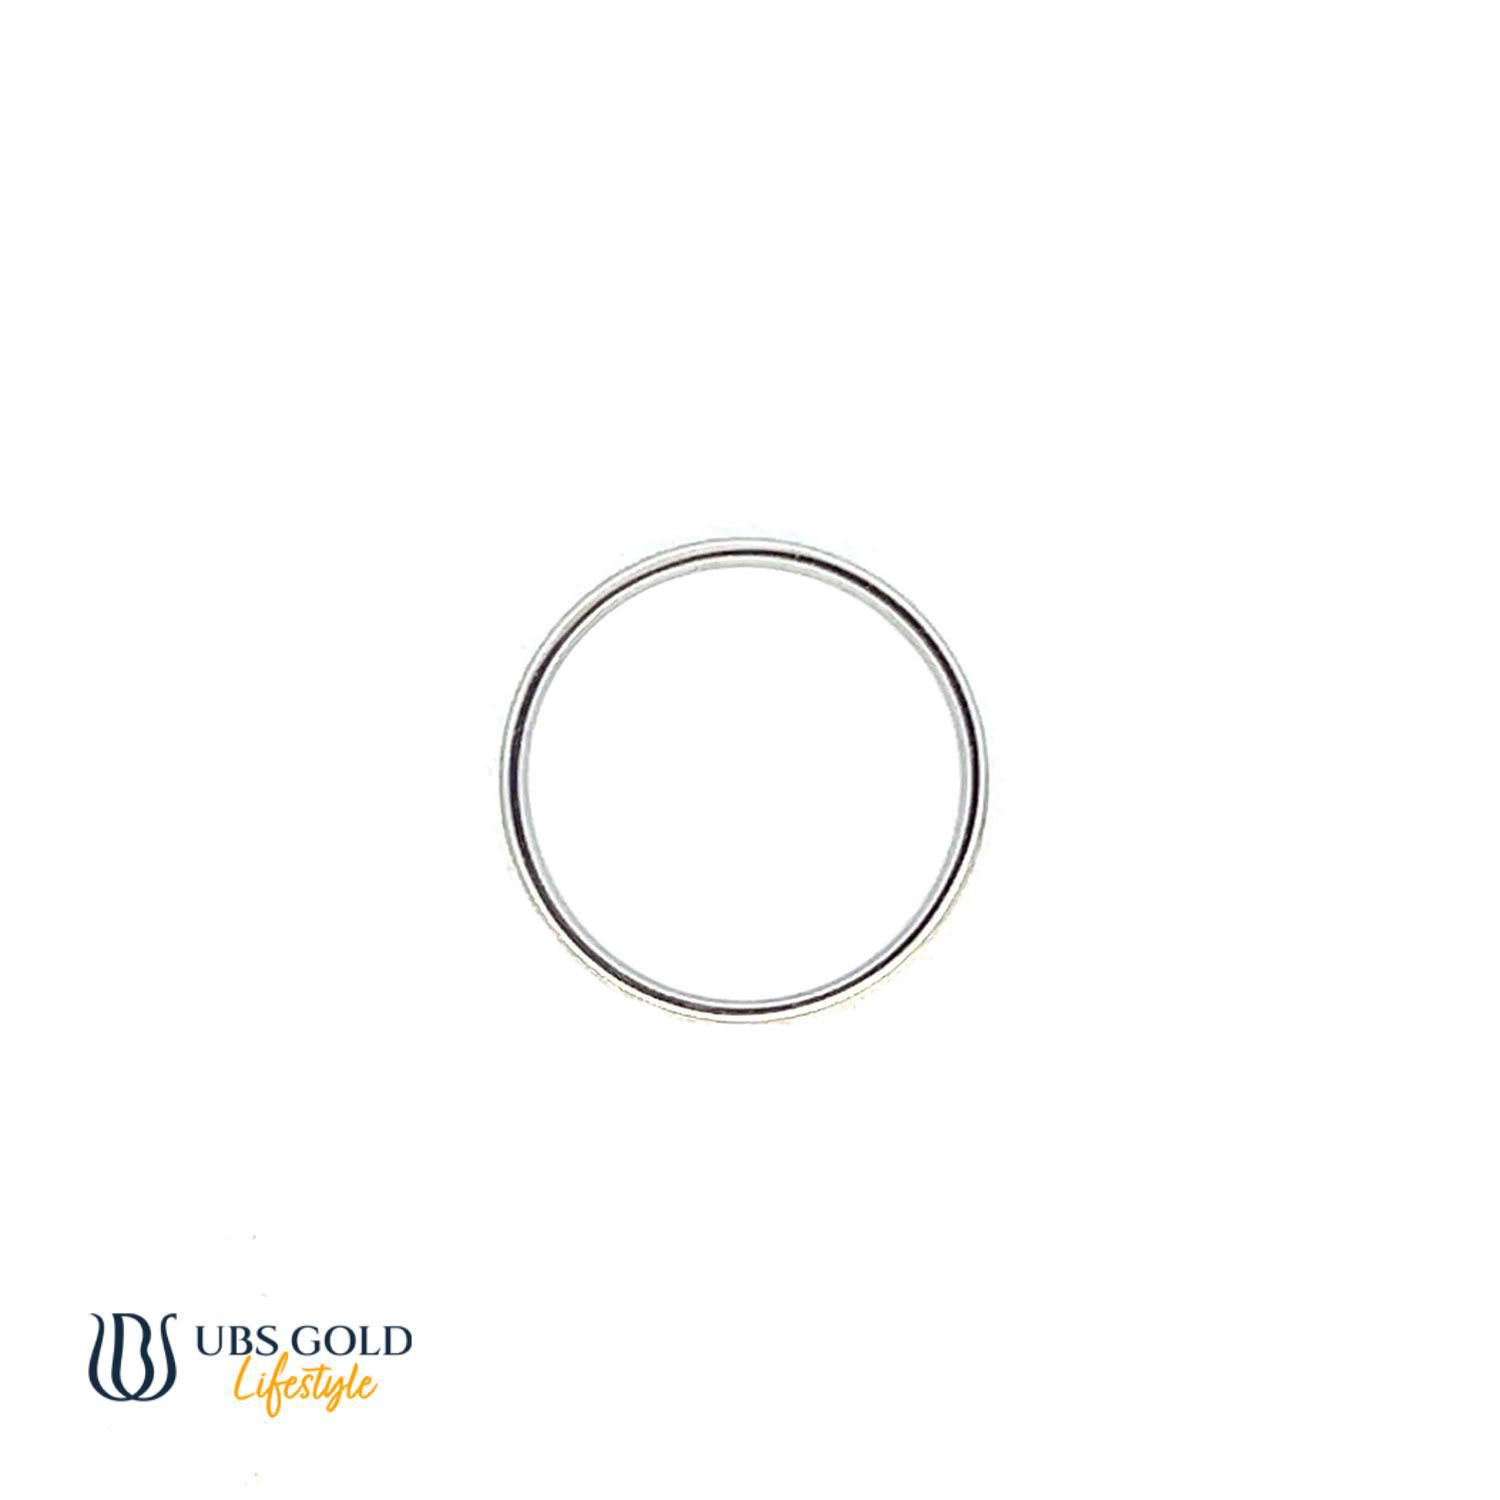 UBS Gold Cincin Emas - E7c0003 - 17K